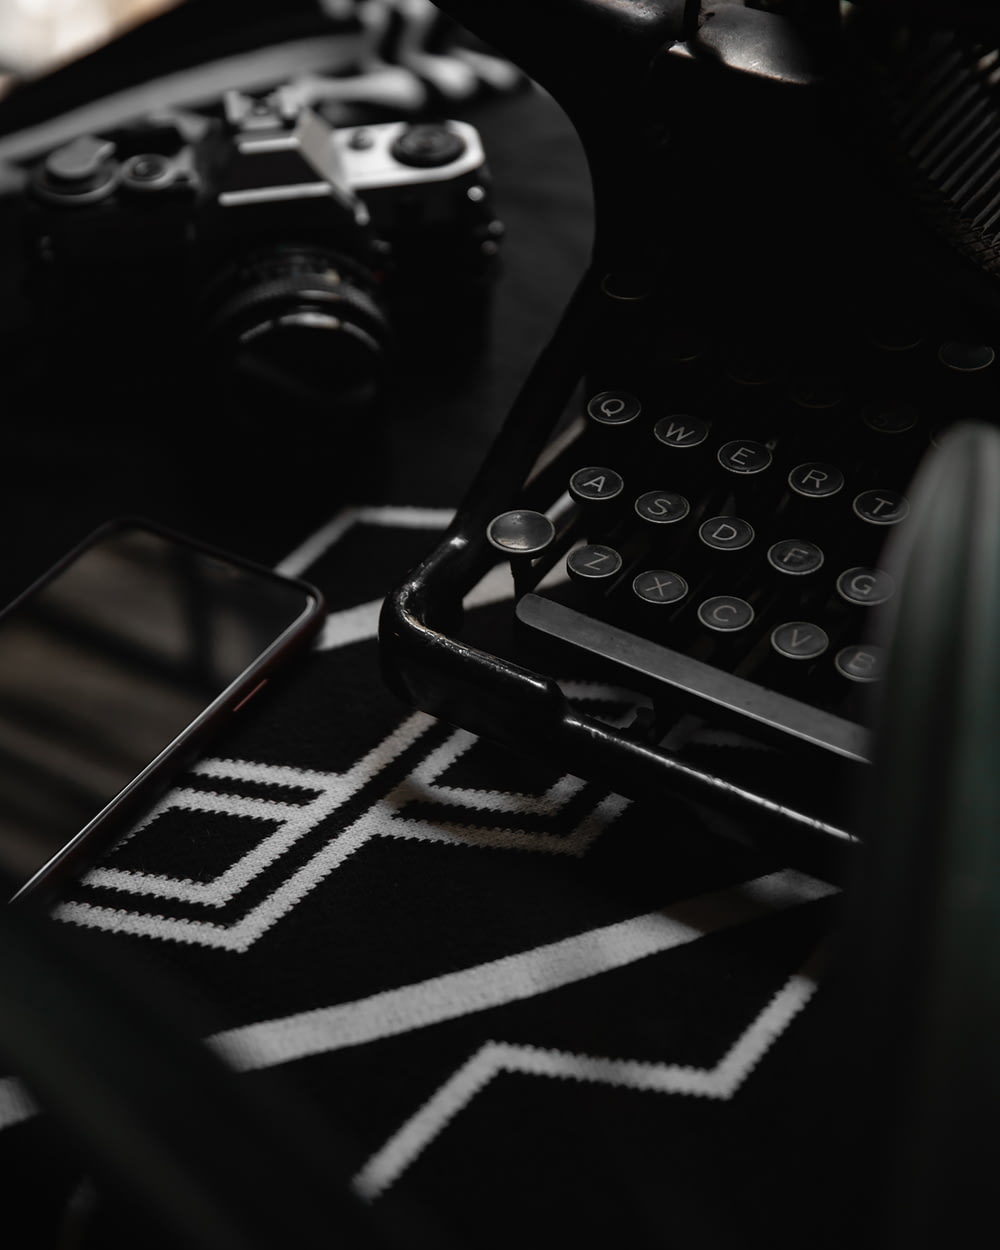 black and white typewriter on black and white textile